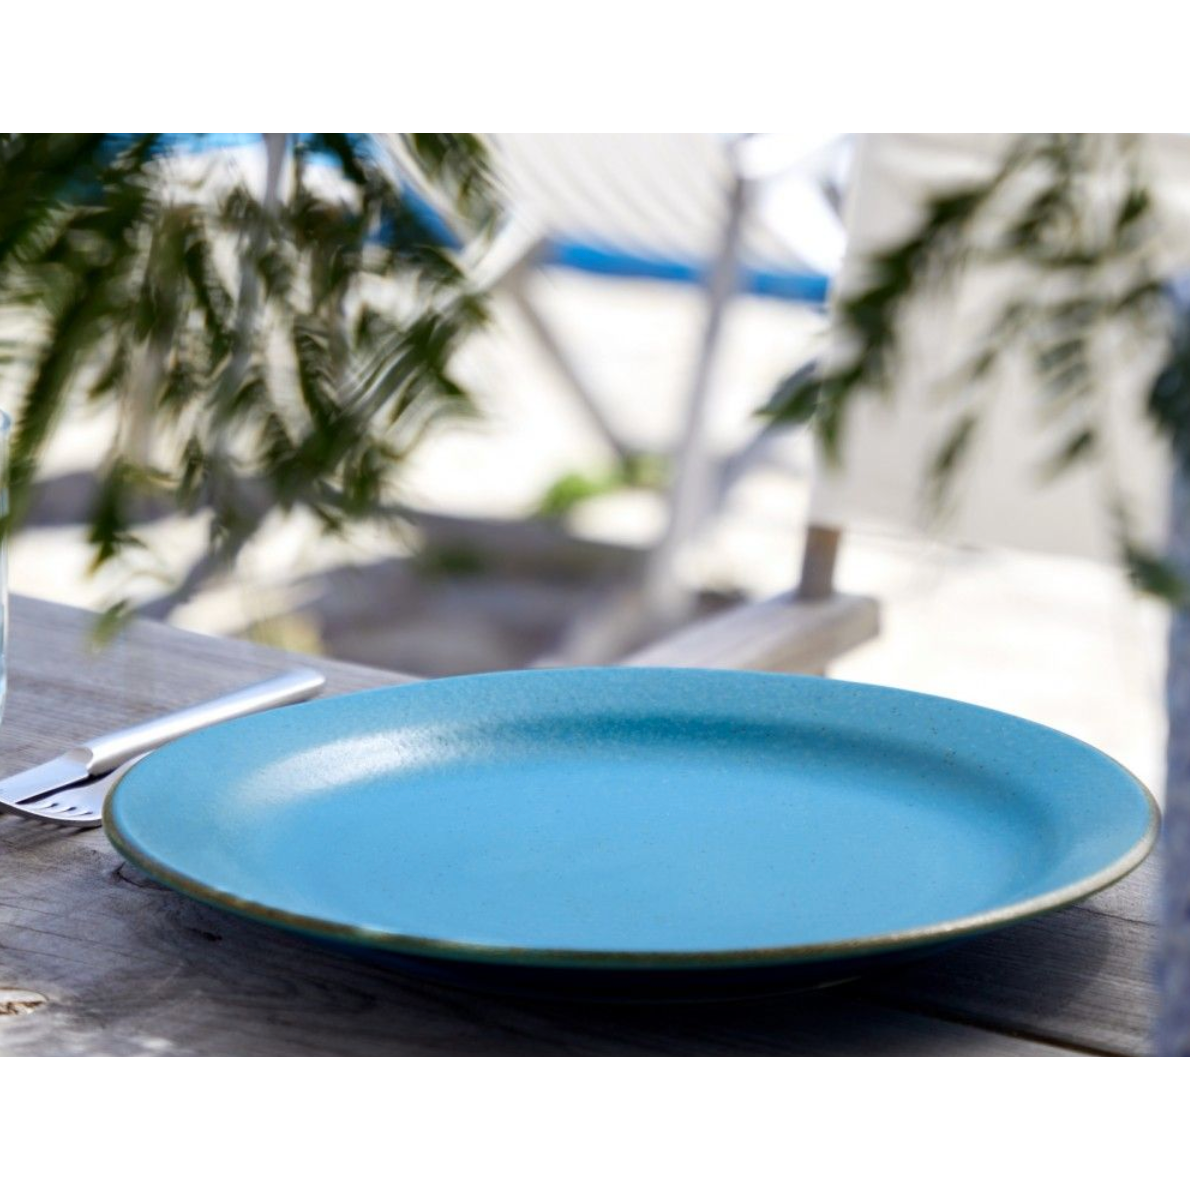 Casafina Salad Plate, Blue